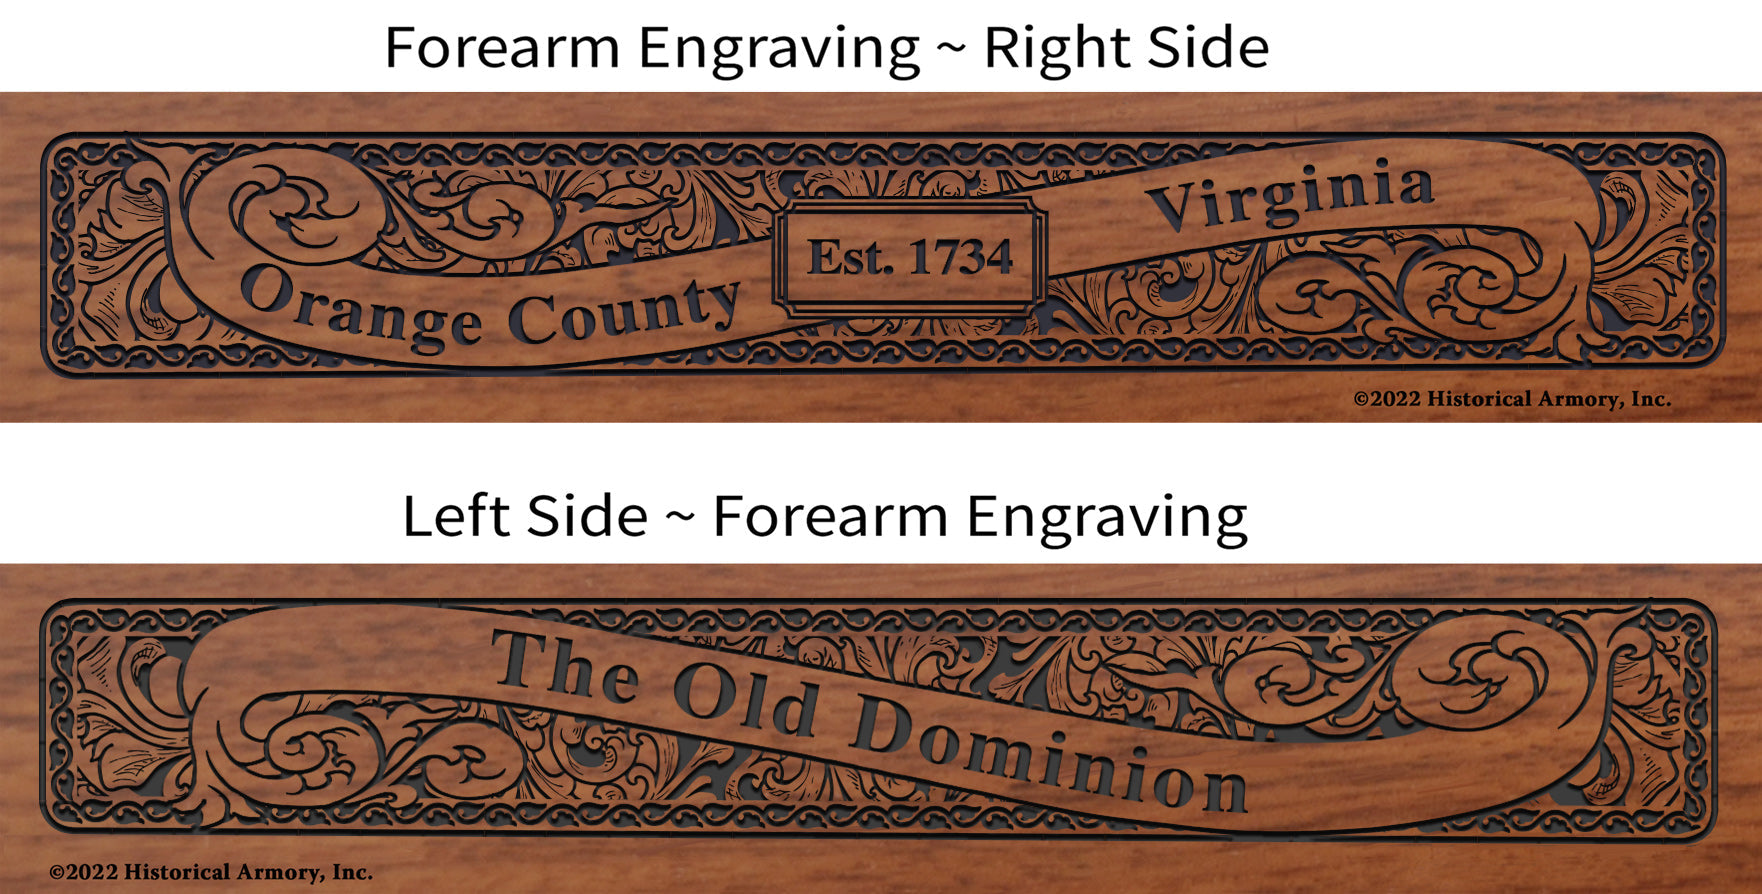 Orange County Virginia Engraved Rifle Forearm